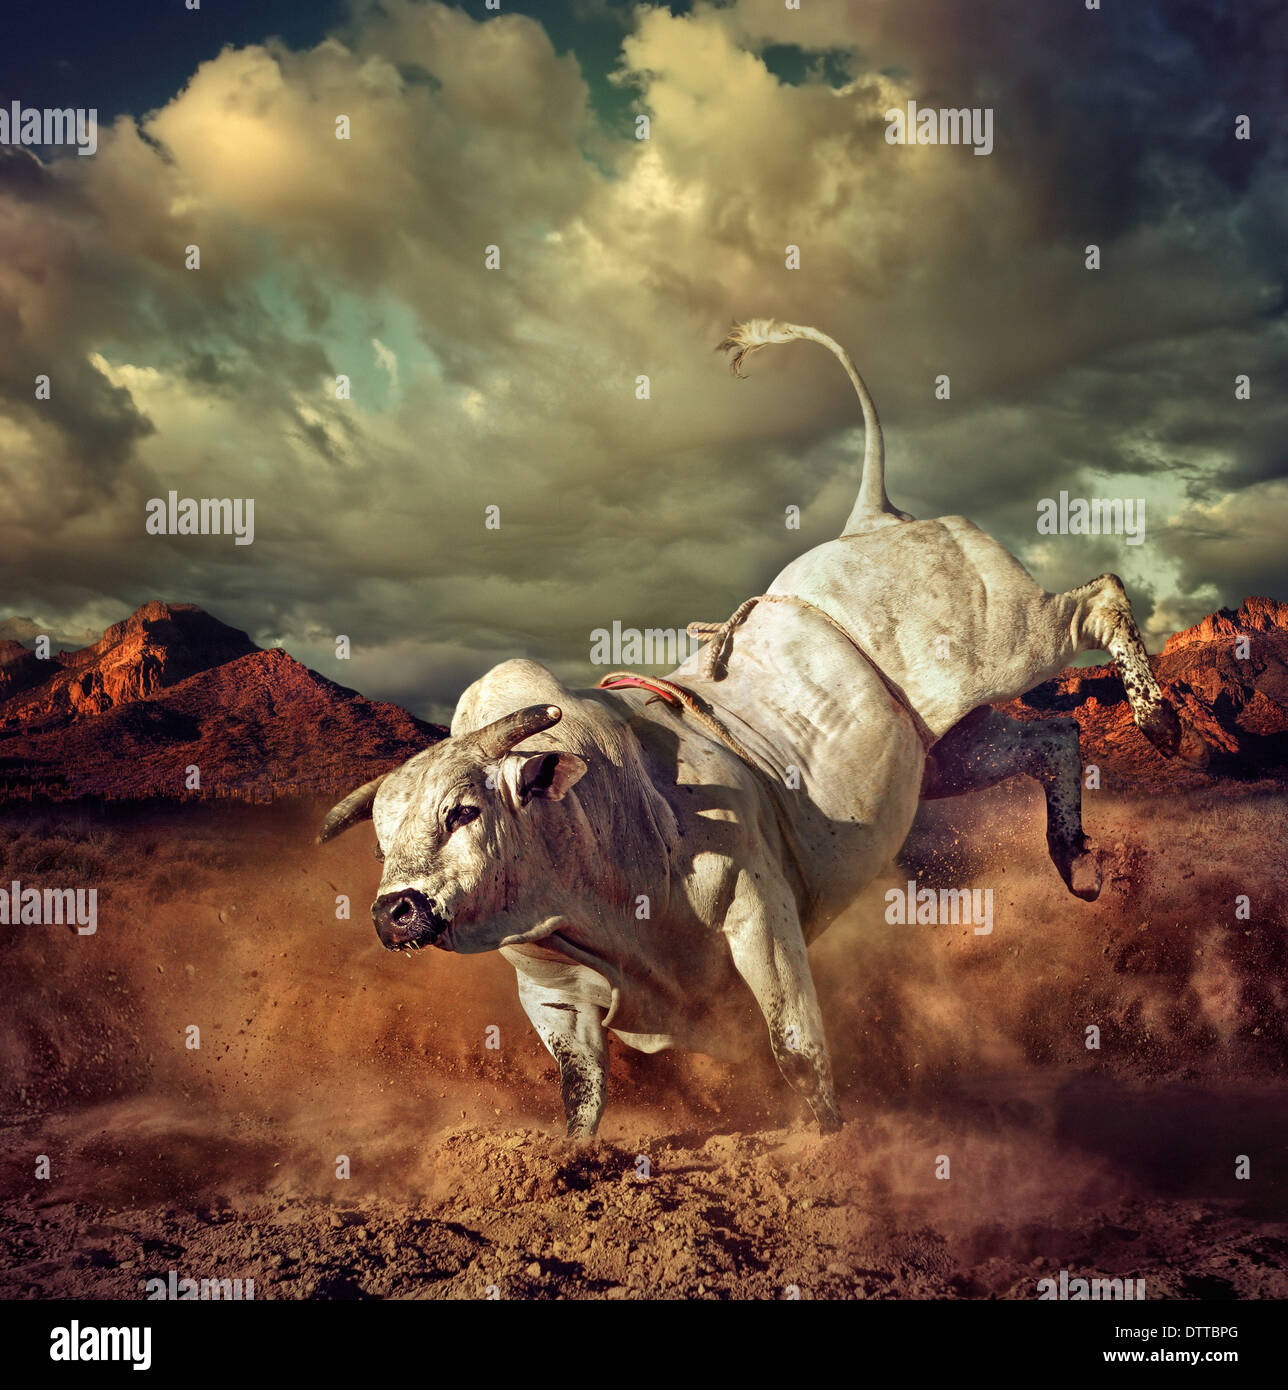 Bucking bull kicking dirt in desert Stock Photo